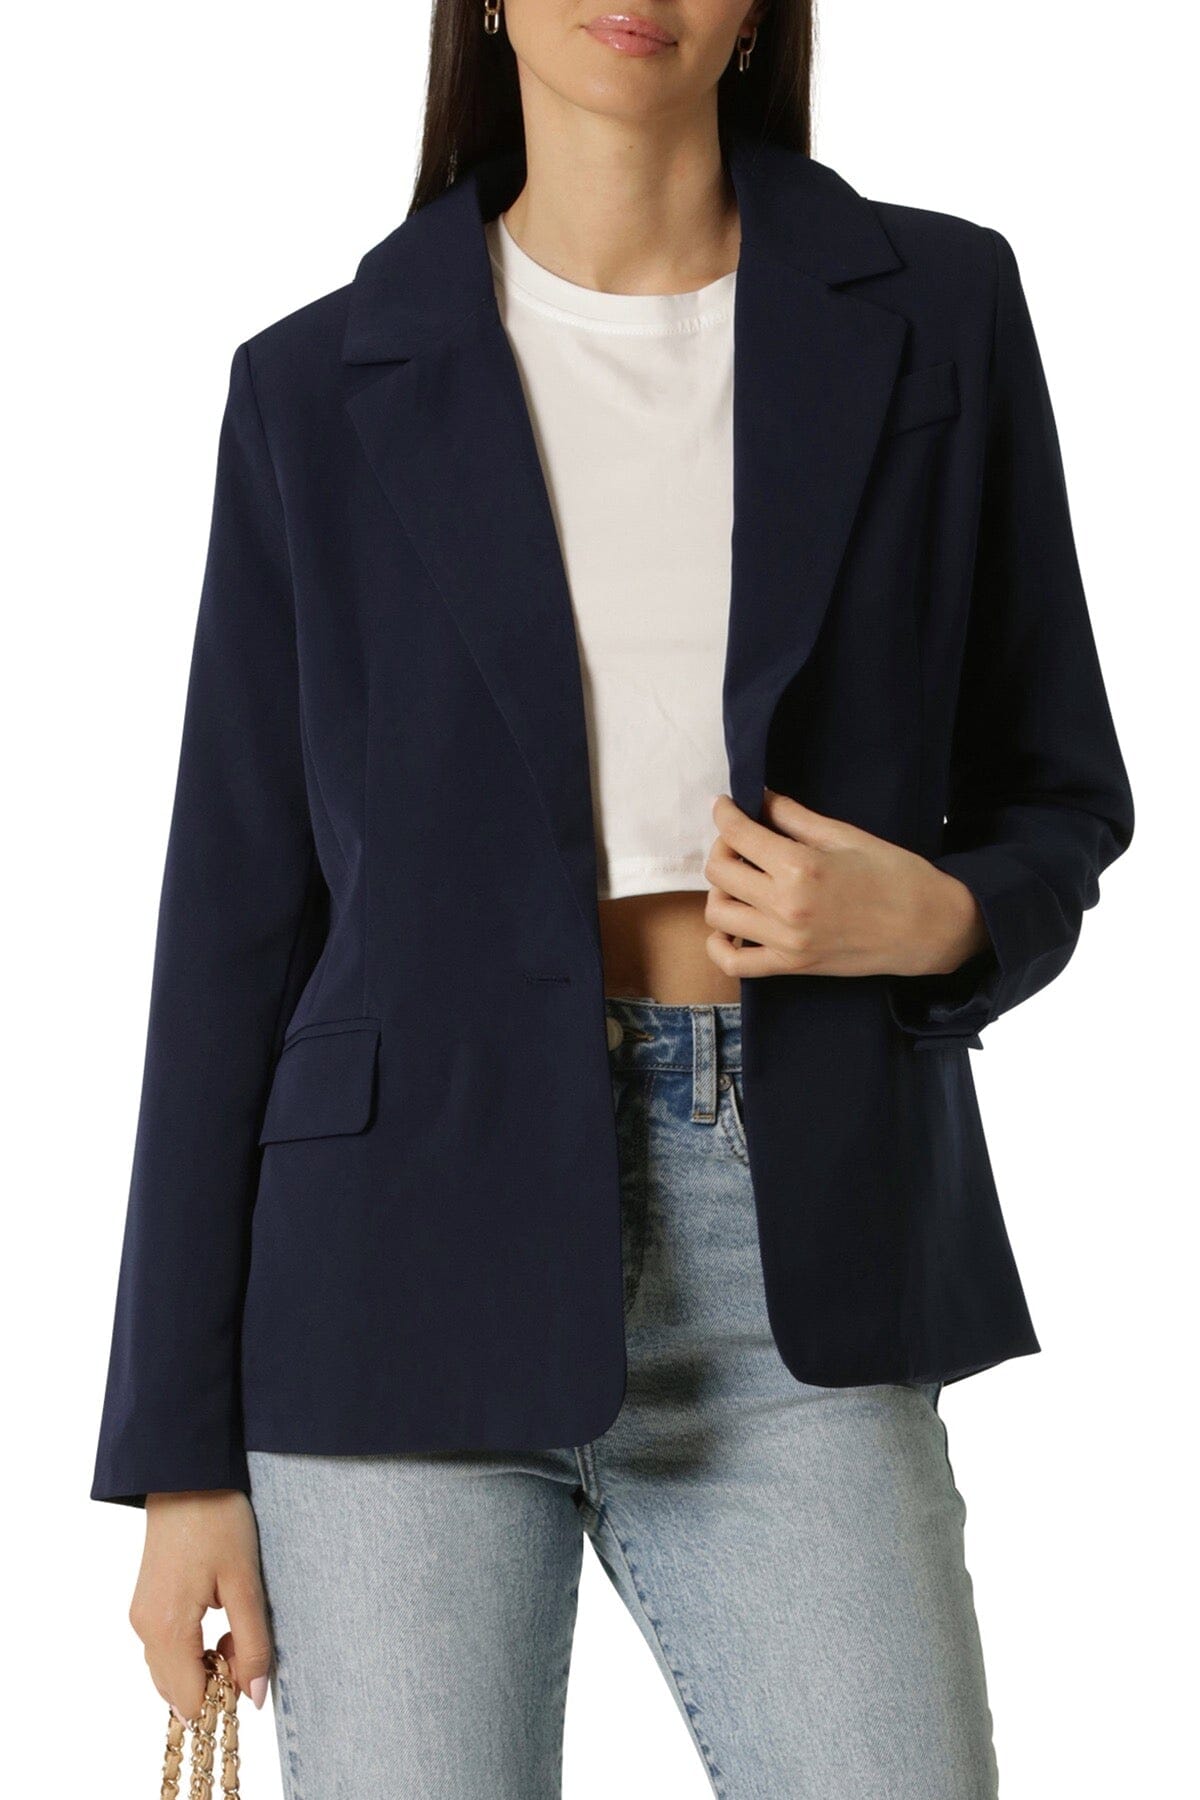 Single Button Stretch Suit Blazer Jacket Coat Navy Blue - Figure Flattering Office to Date Night Blazers Jackets for Women